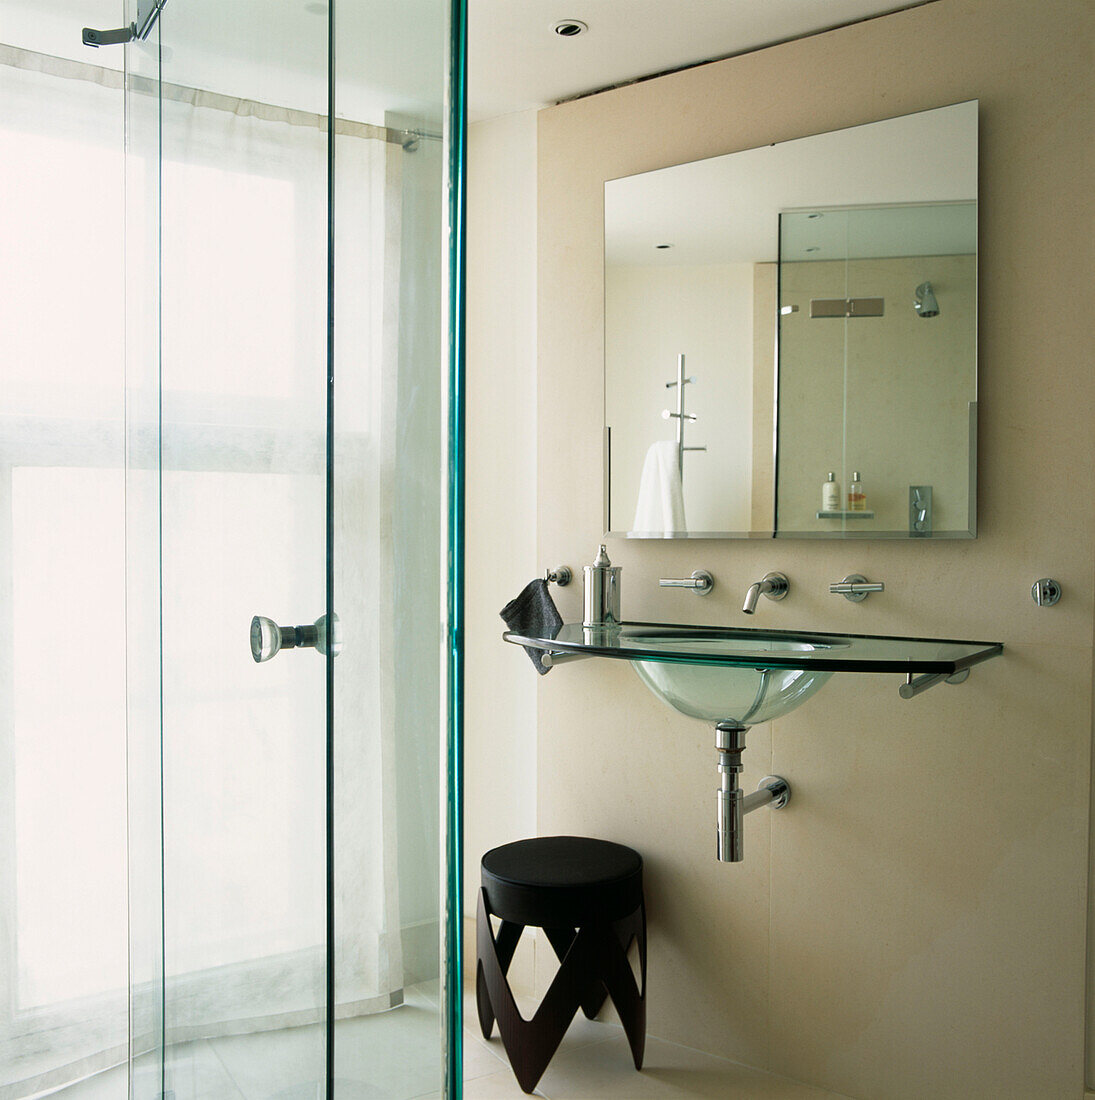 Limestone bathroom with glass shower door and glass basin